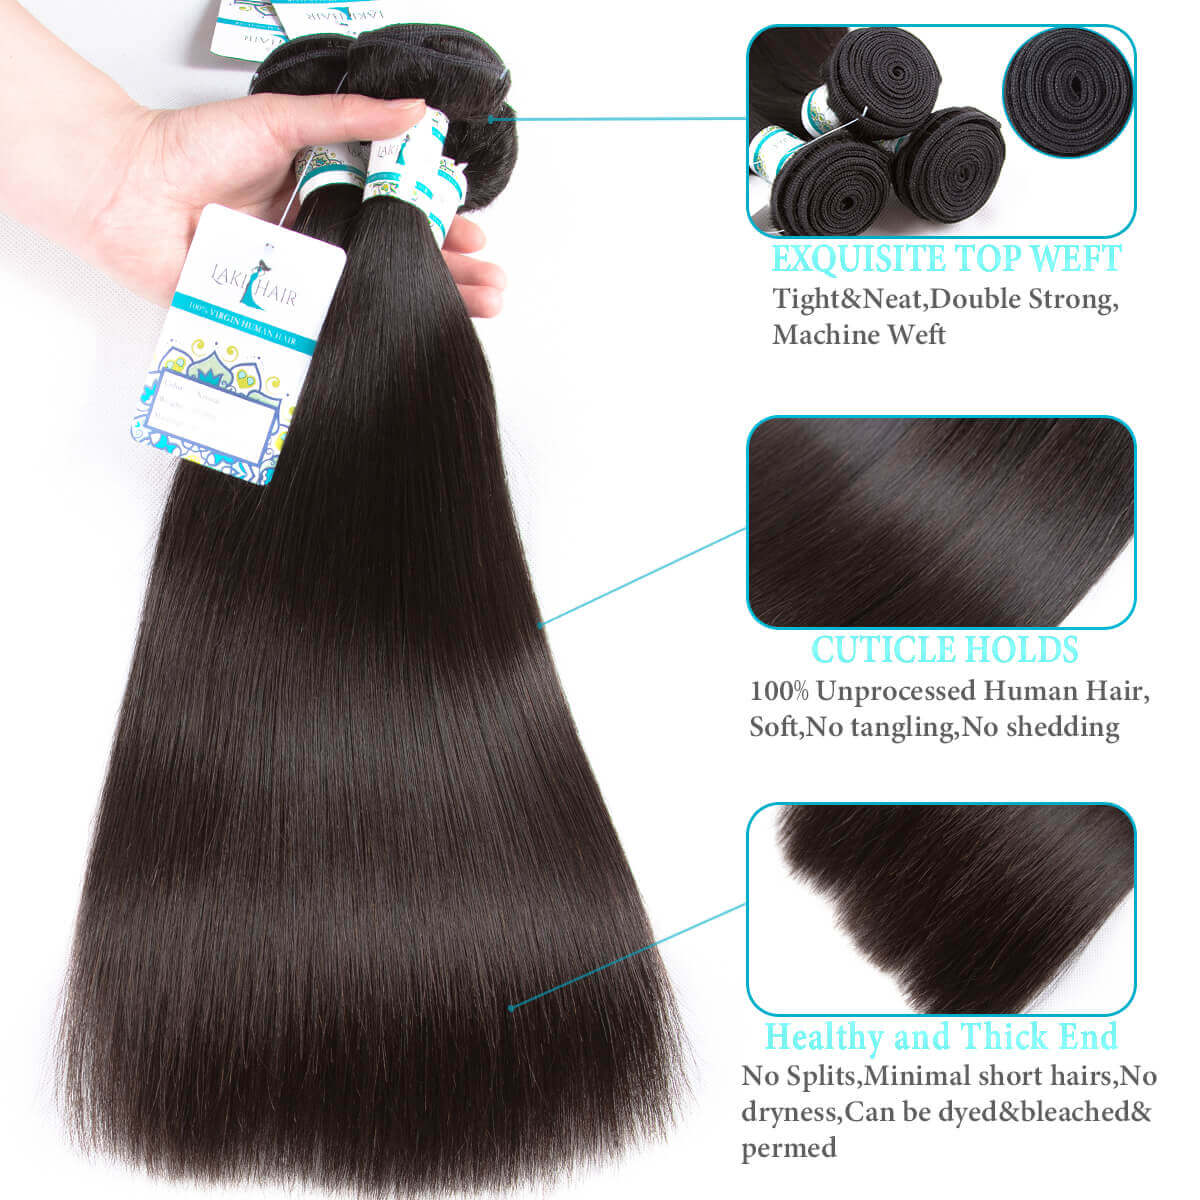 Lakihair 8A Brazilian Straight Hair 3 Bundles With Closure 4x4 Unprocessed Virgin Human Hair Bundles